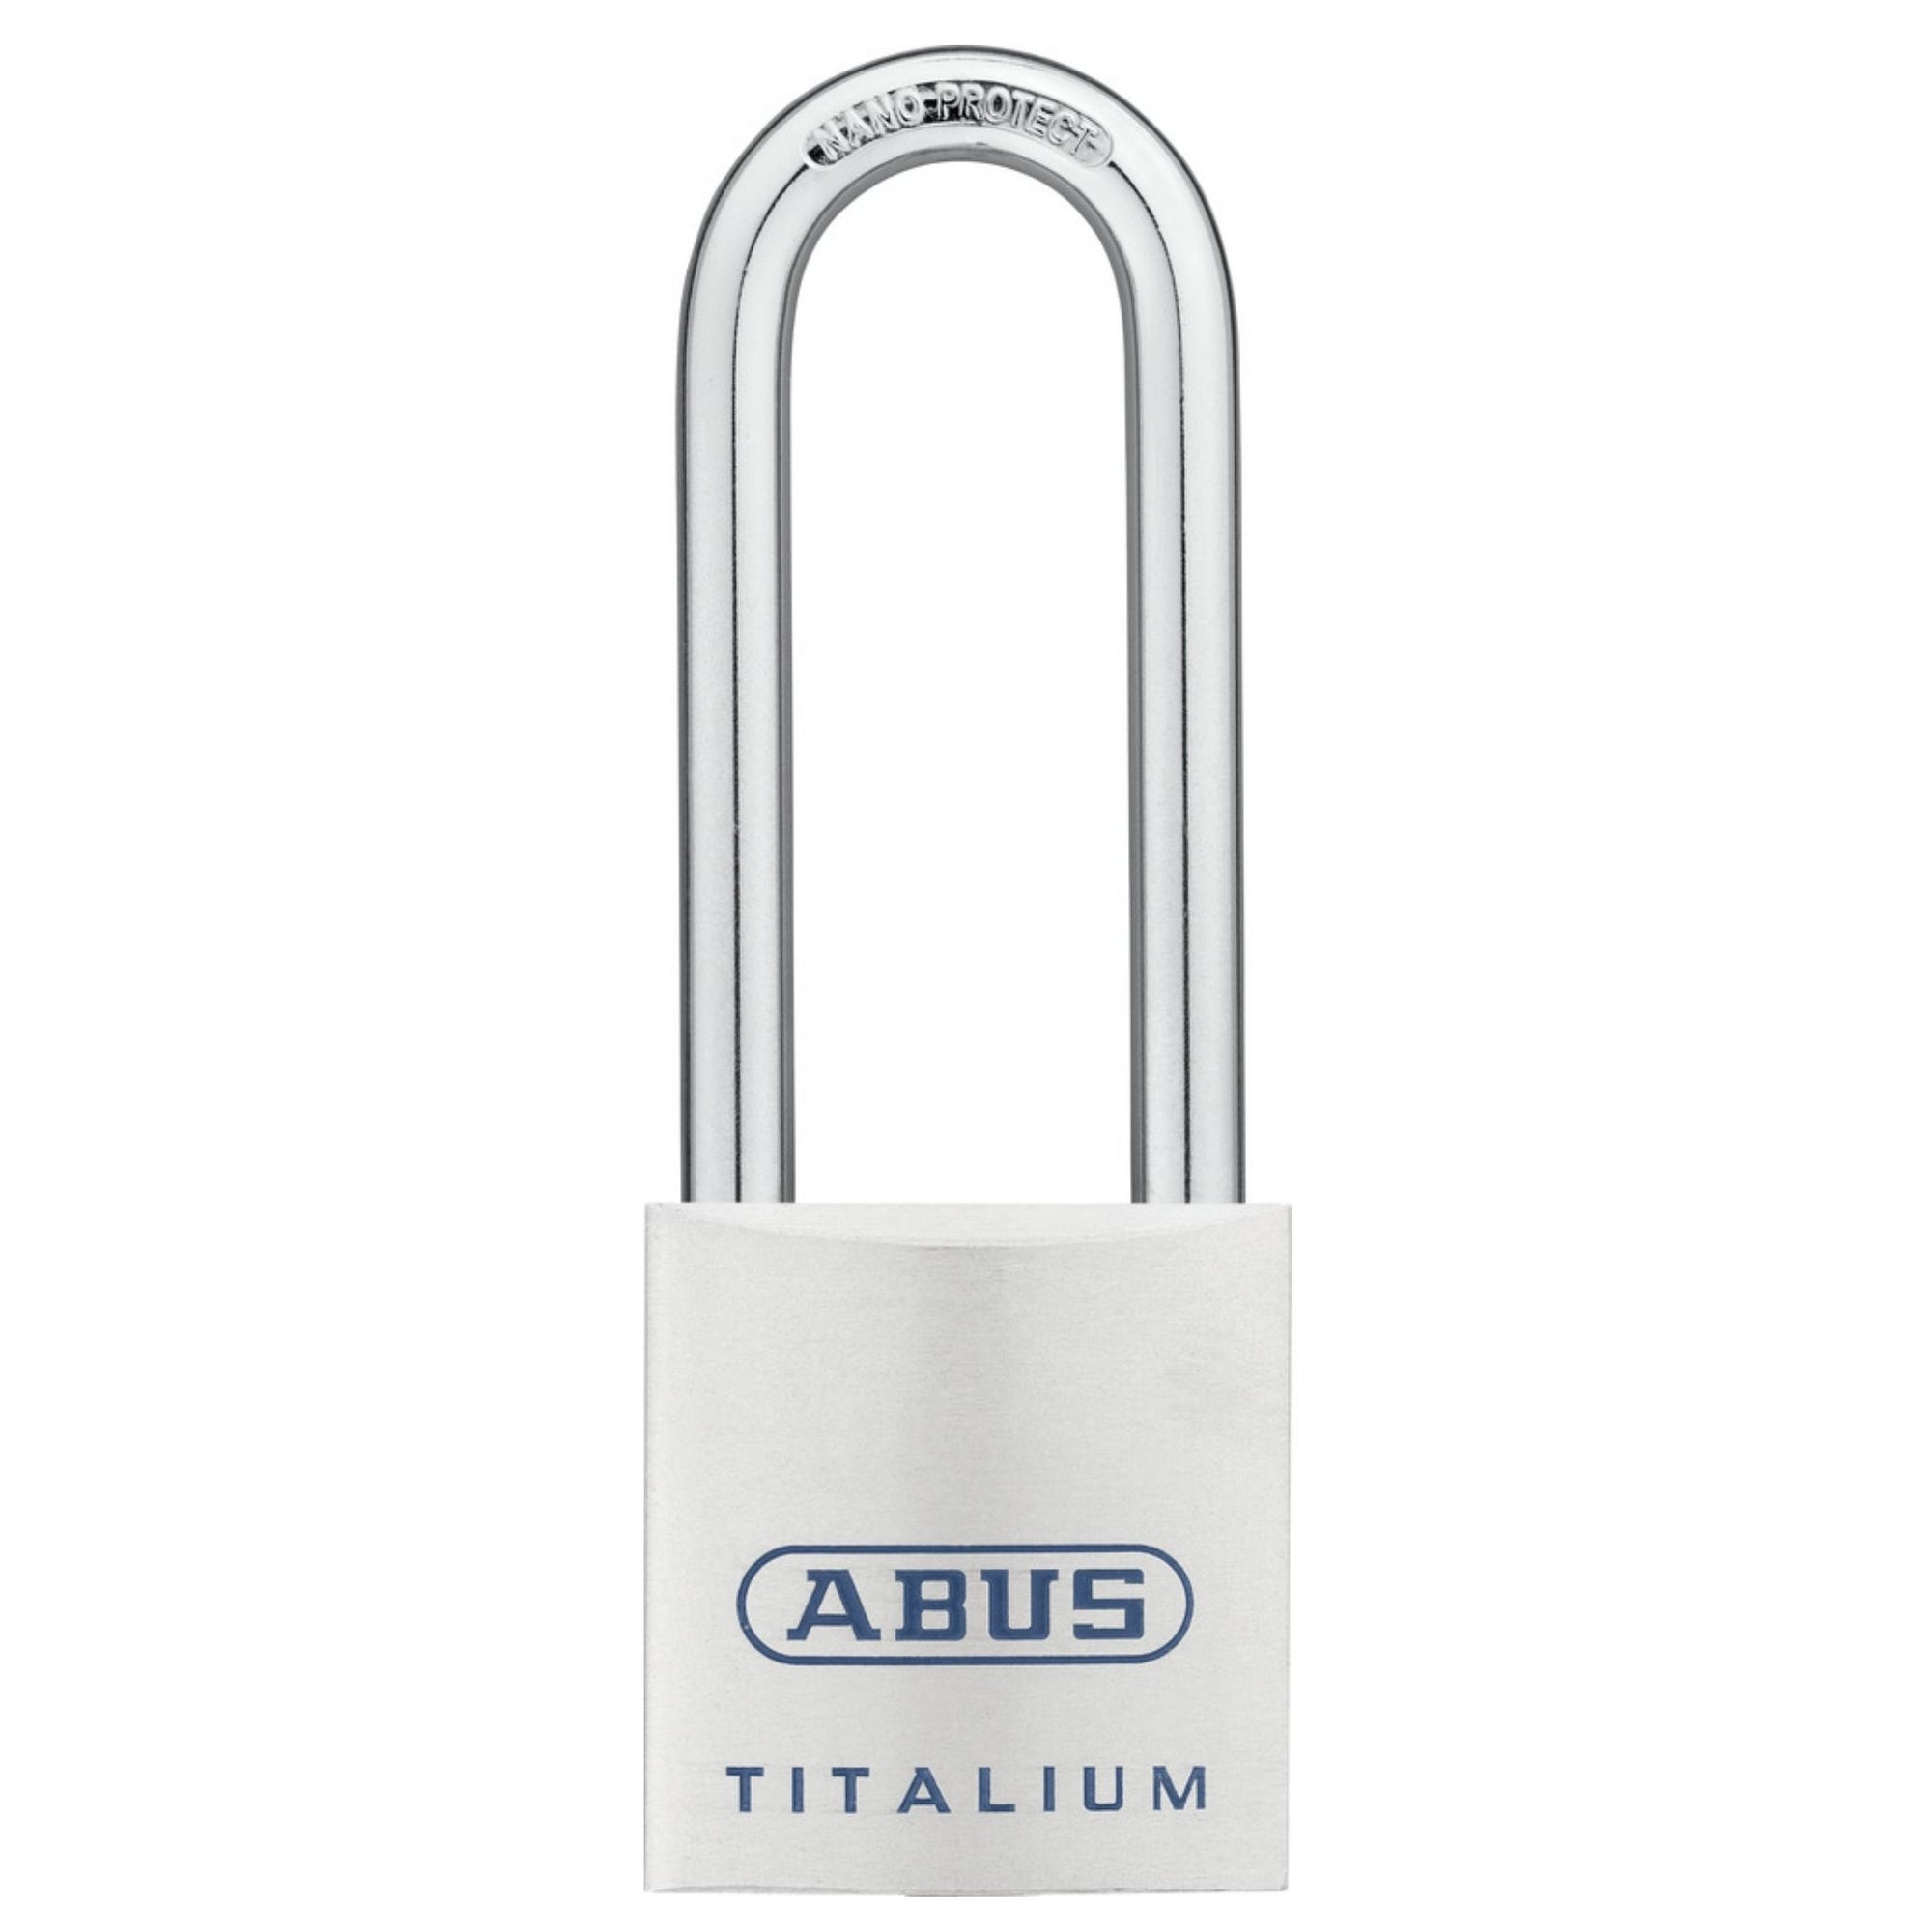 Abus 80TI/40HB63 KA 8011 Titalium Padlock with 2-Inch Shackle Keyed Alike to Match Key Number KA8011 - The Lock Source